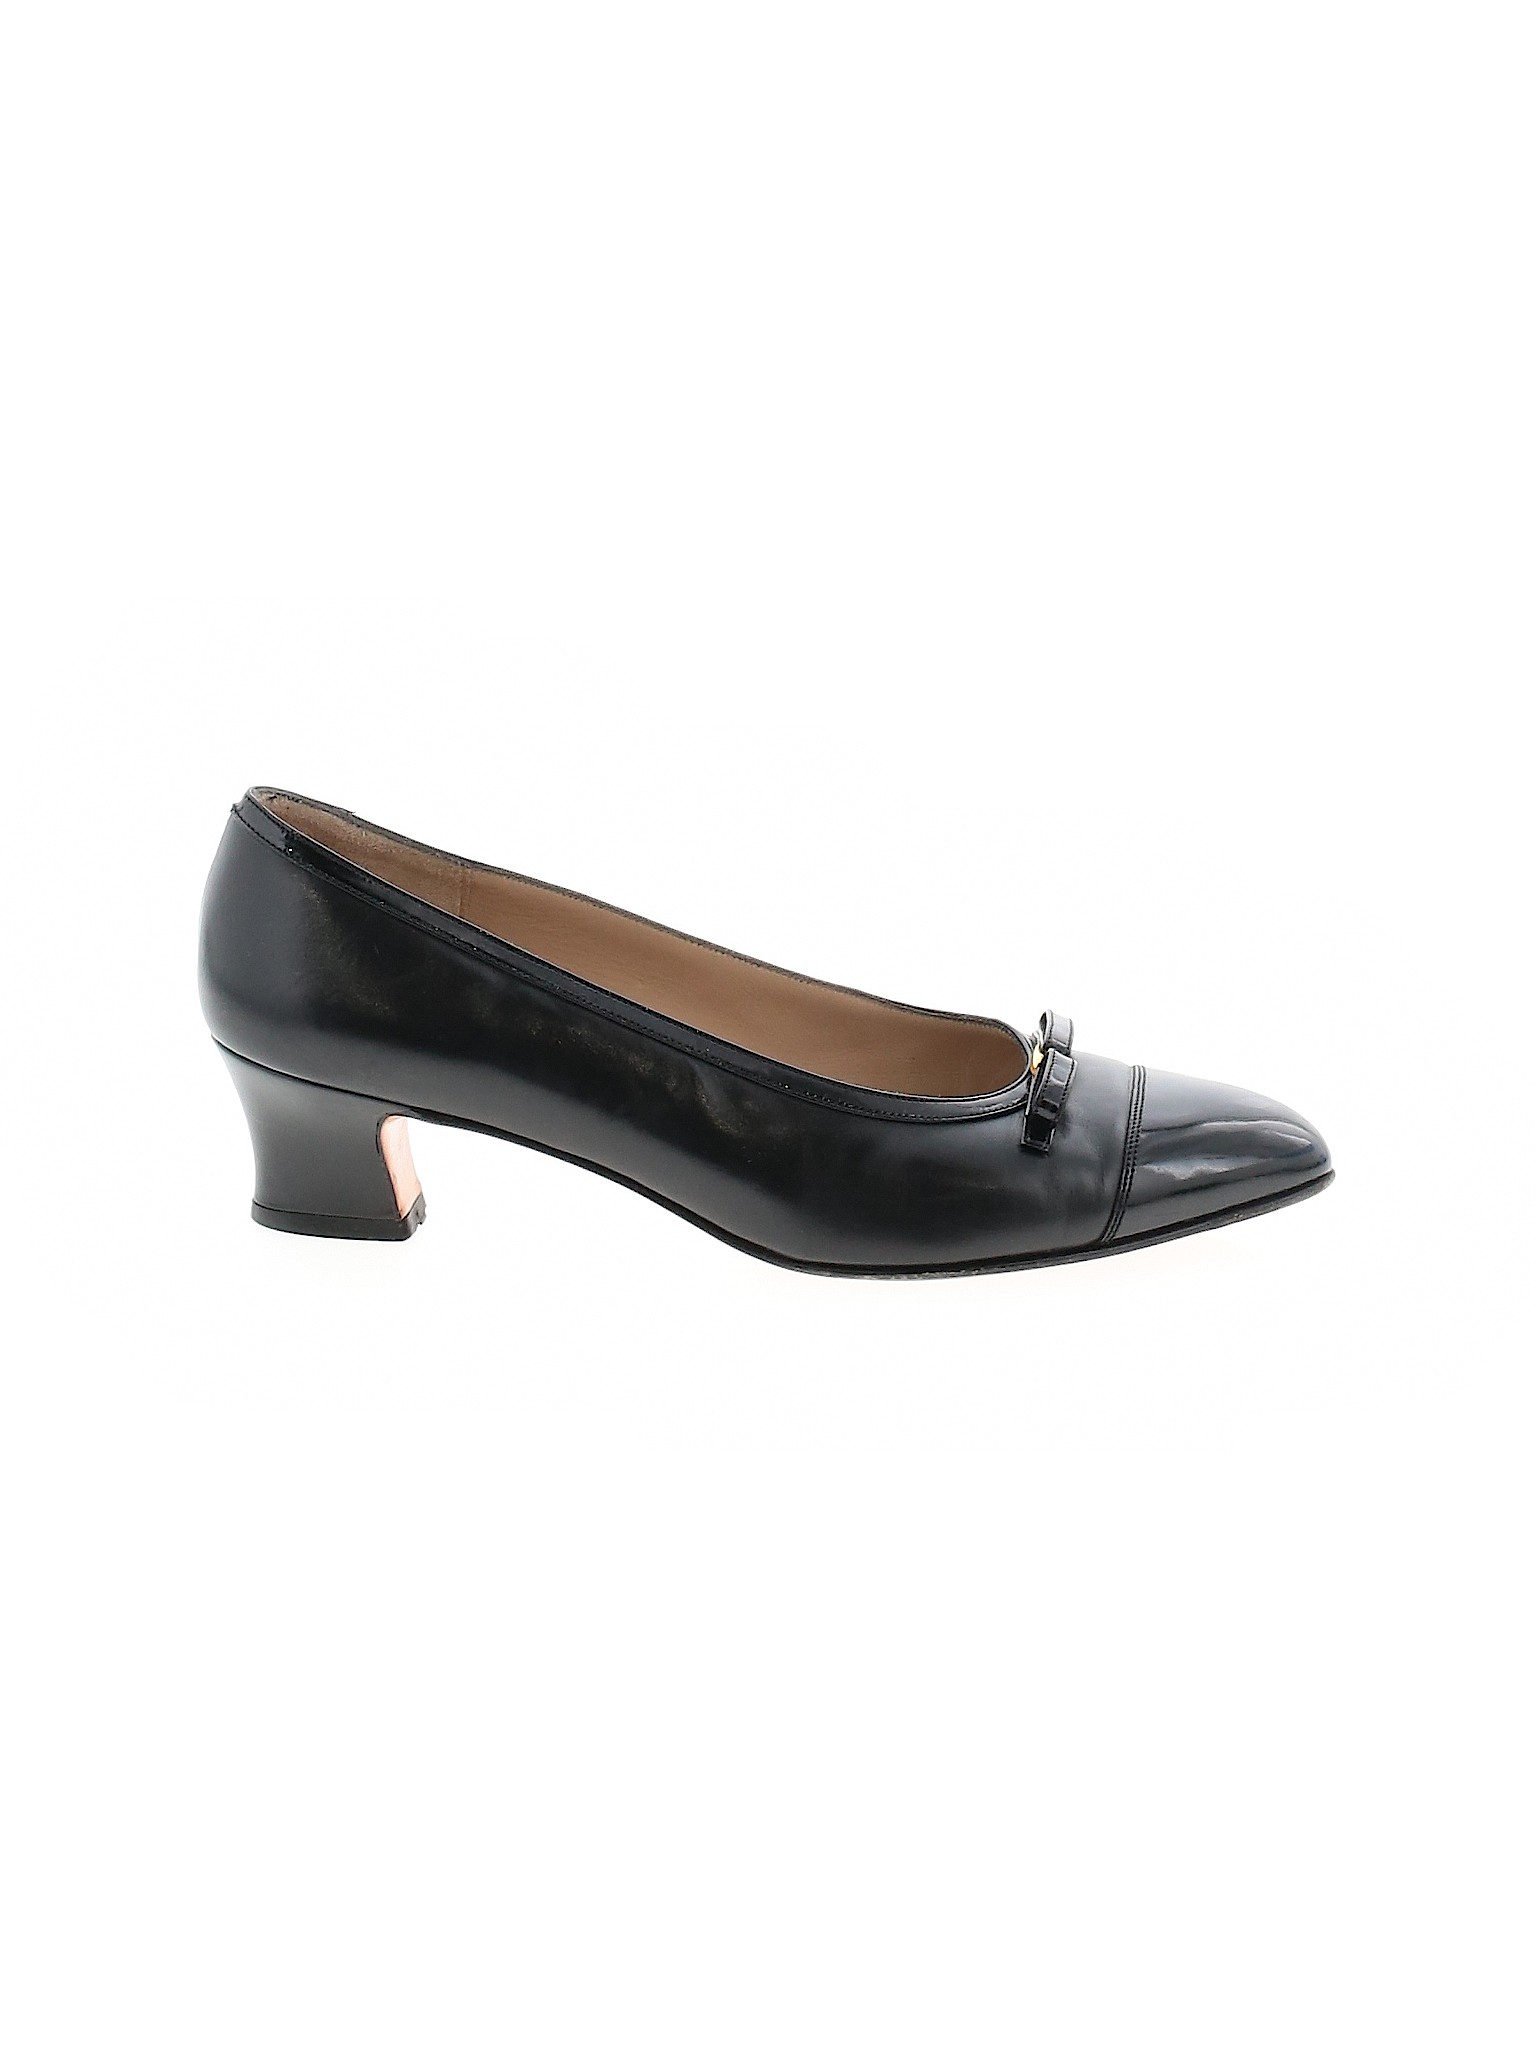 Salvatore Ferragamo Women Black Heels US 6.5 | eBay